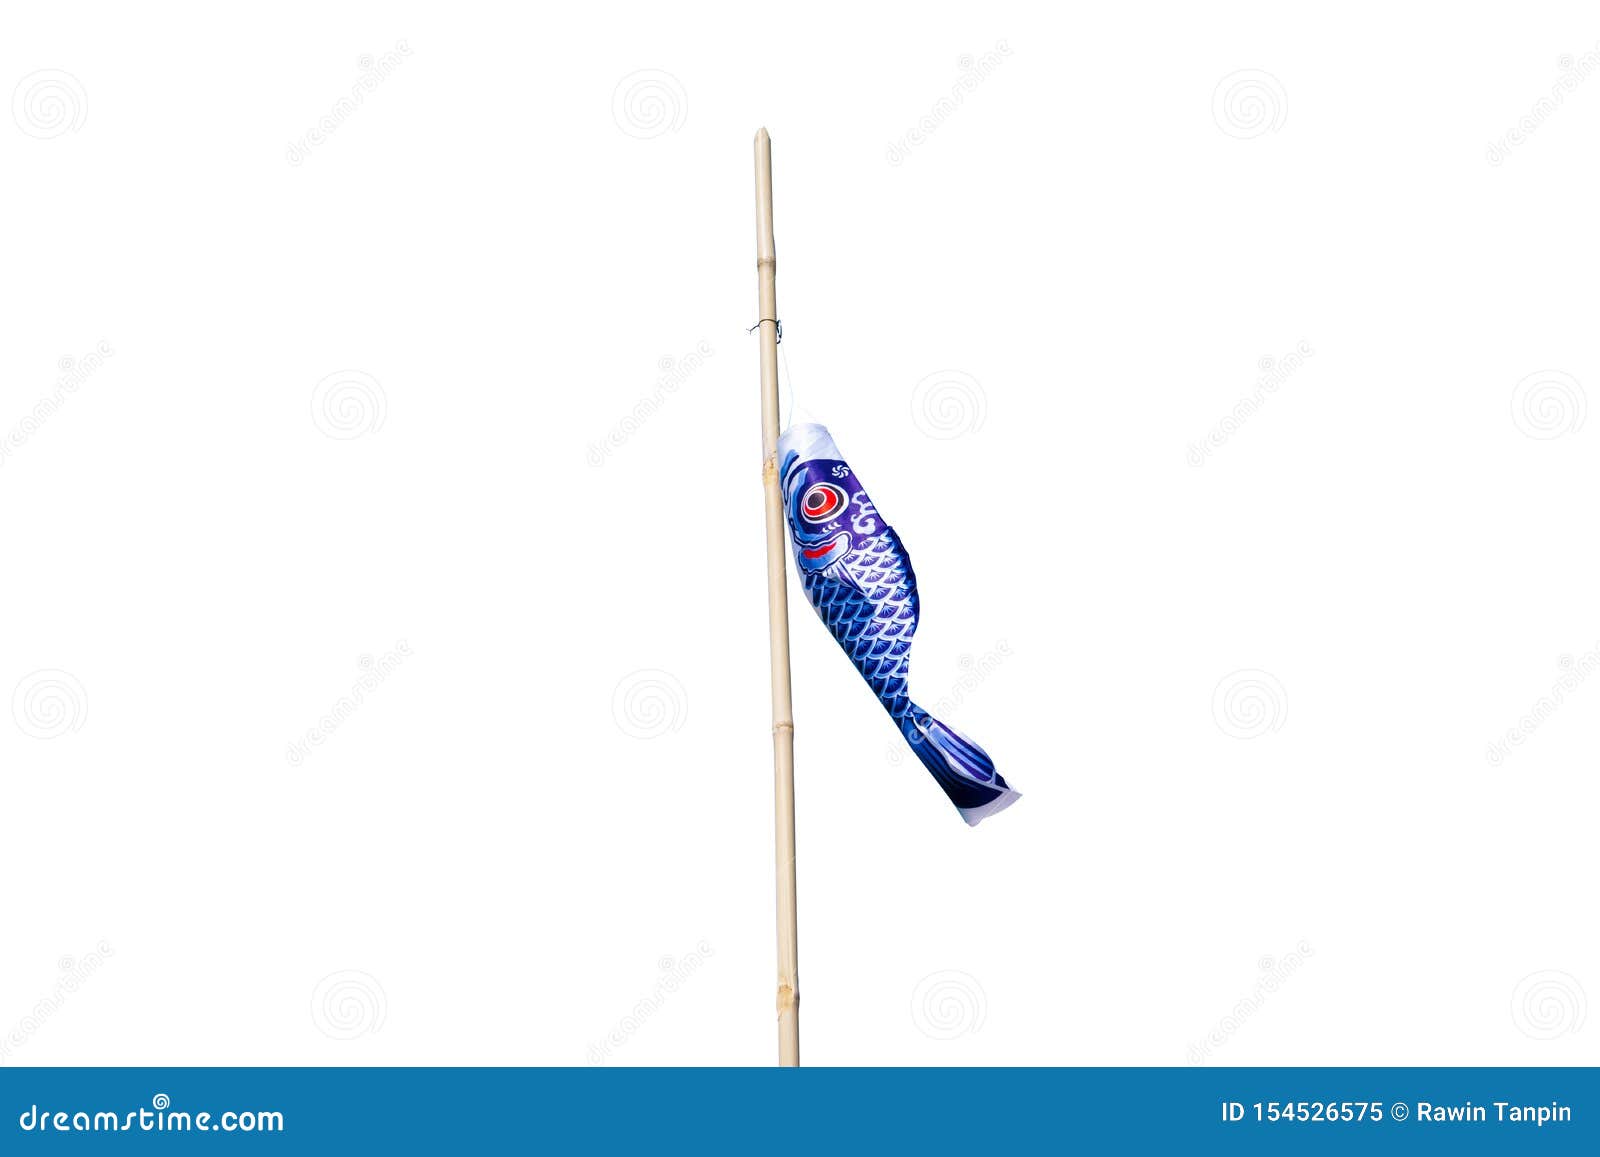 https://thumbs.dreamstime.com/z/japanese-koi-carp-flag-decoration-blow-wind-koinobori-fish-kite-isolated-white-background-154526575.jpg